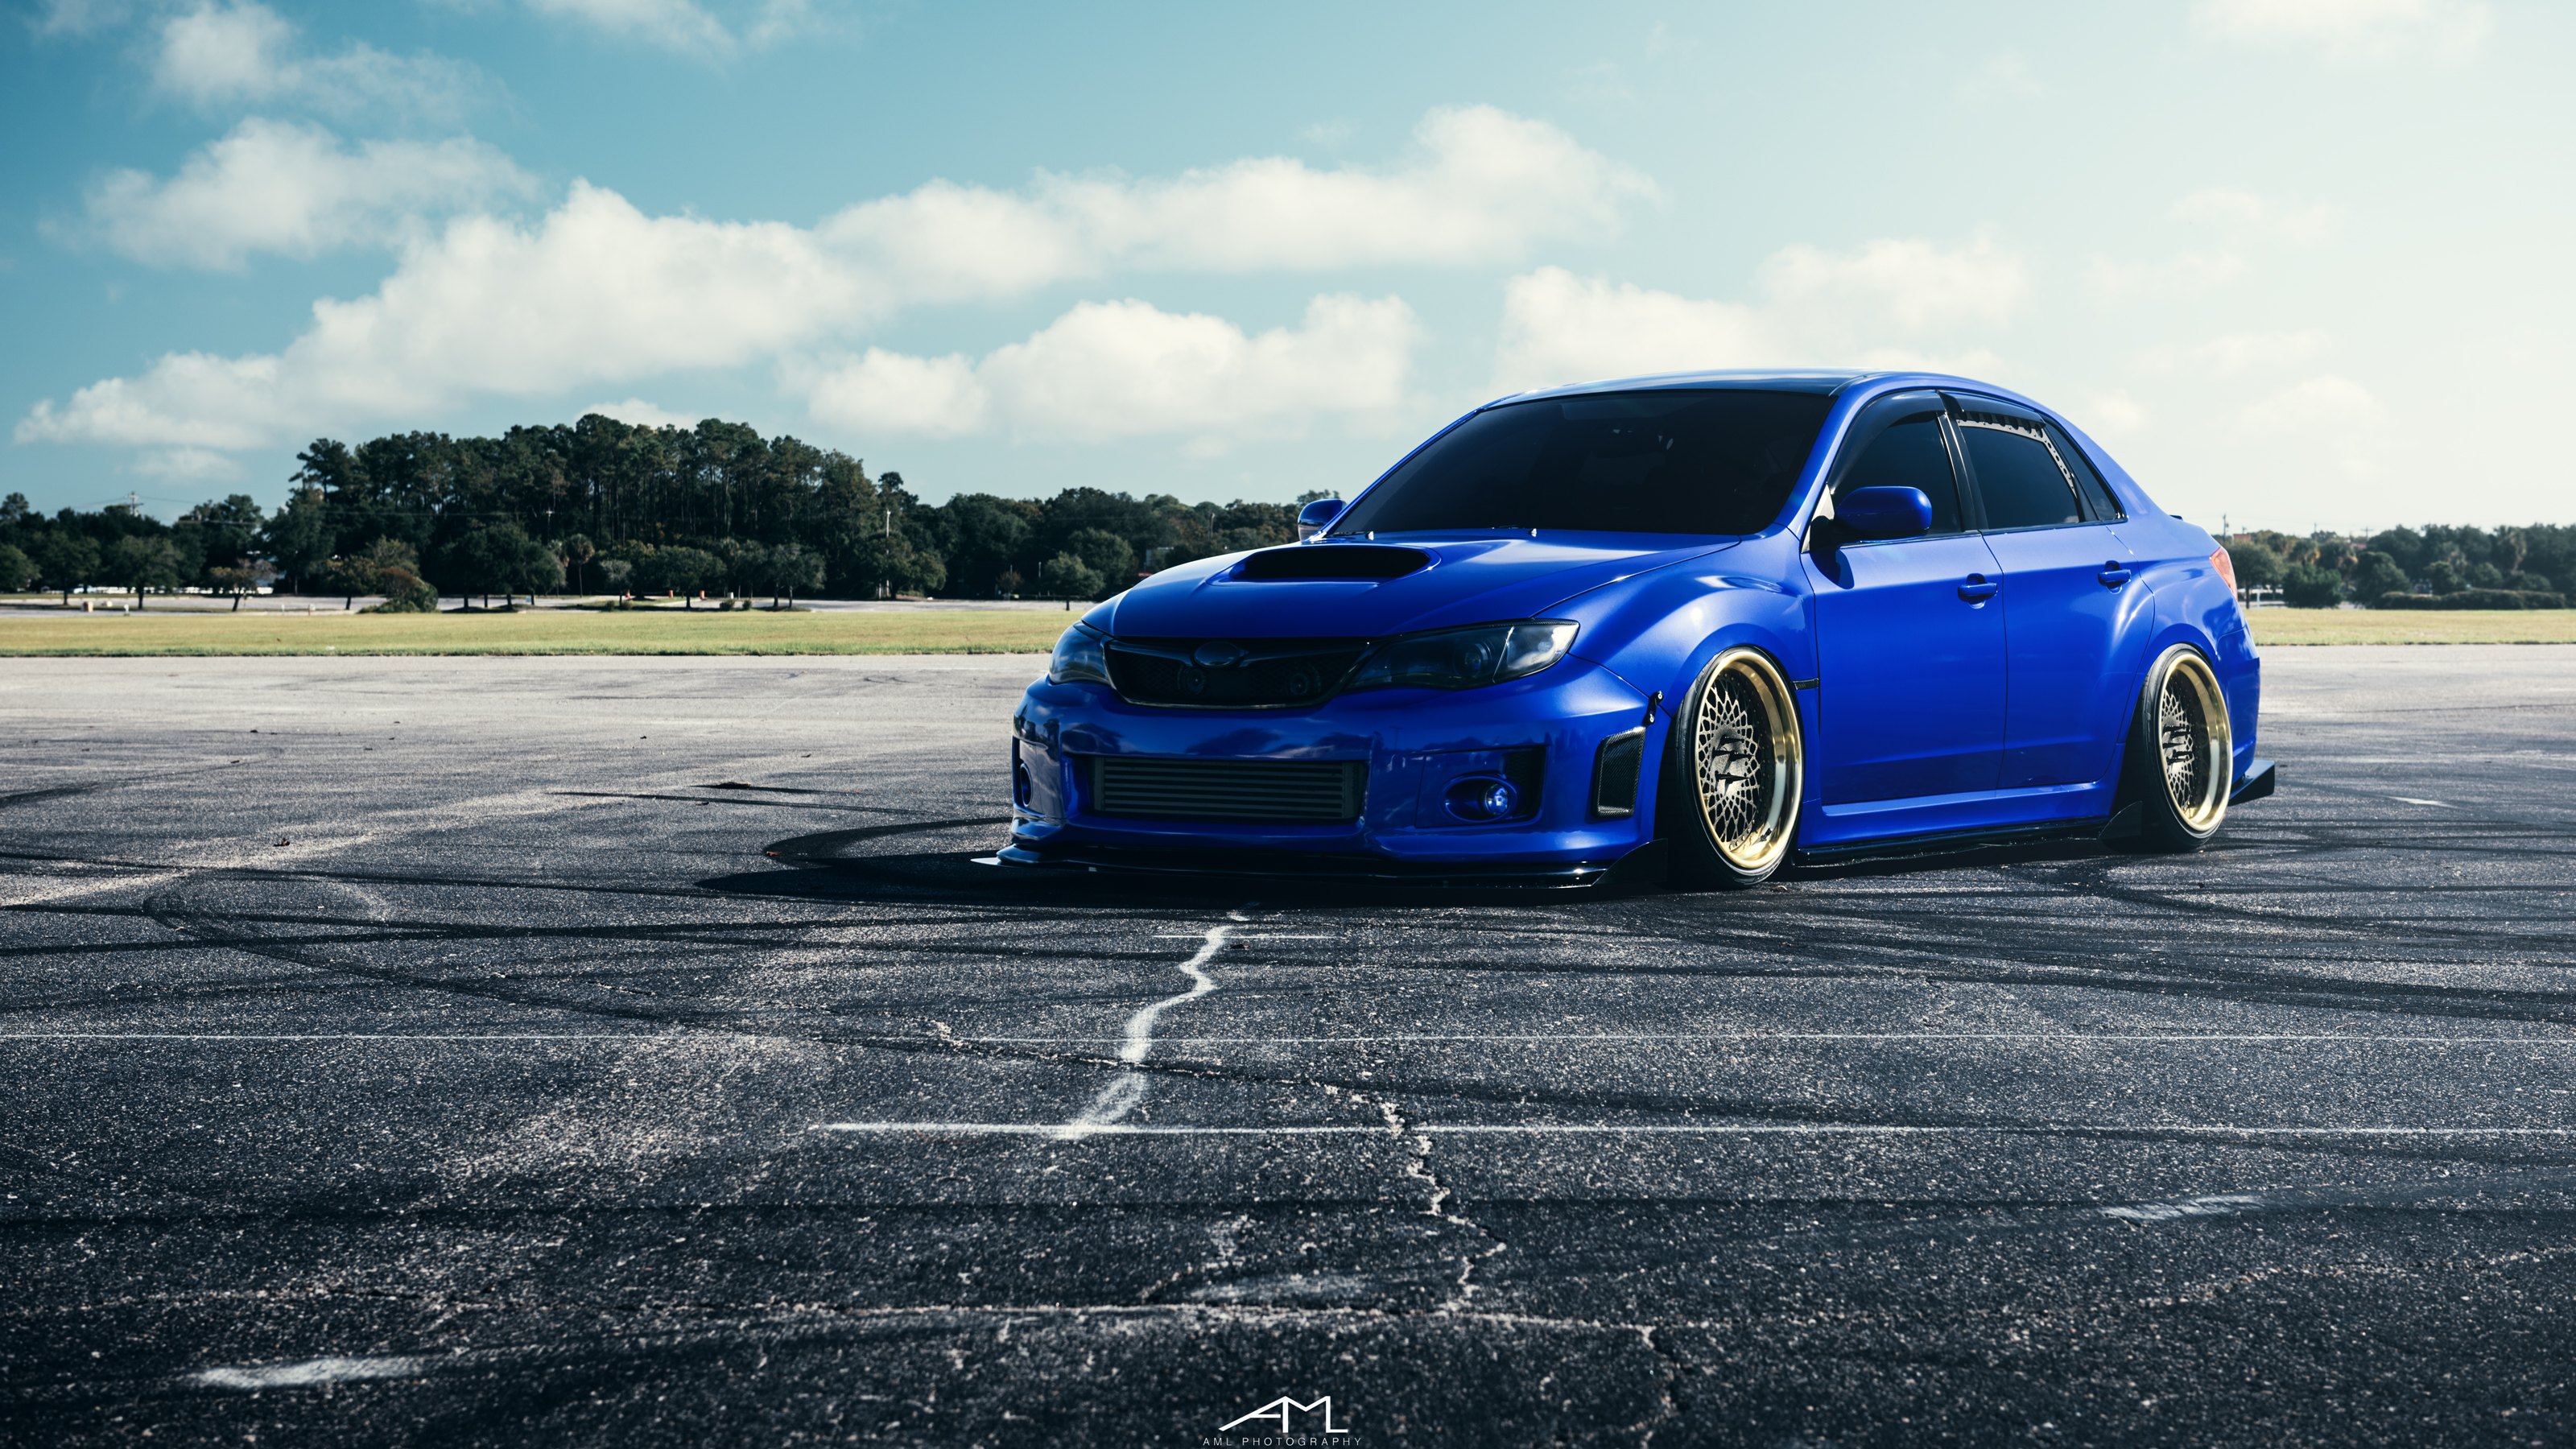 Stance is Everything: Custom Blue Subaru WRX — CARiD.com Gallery